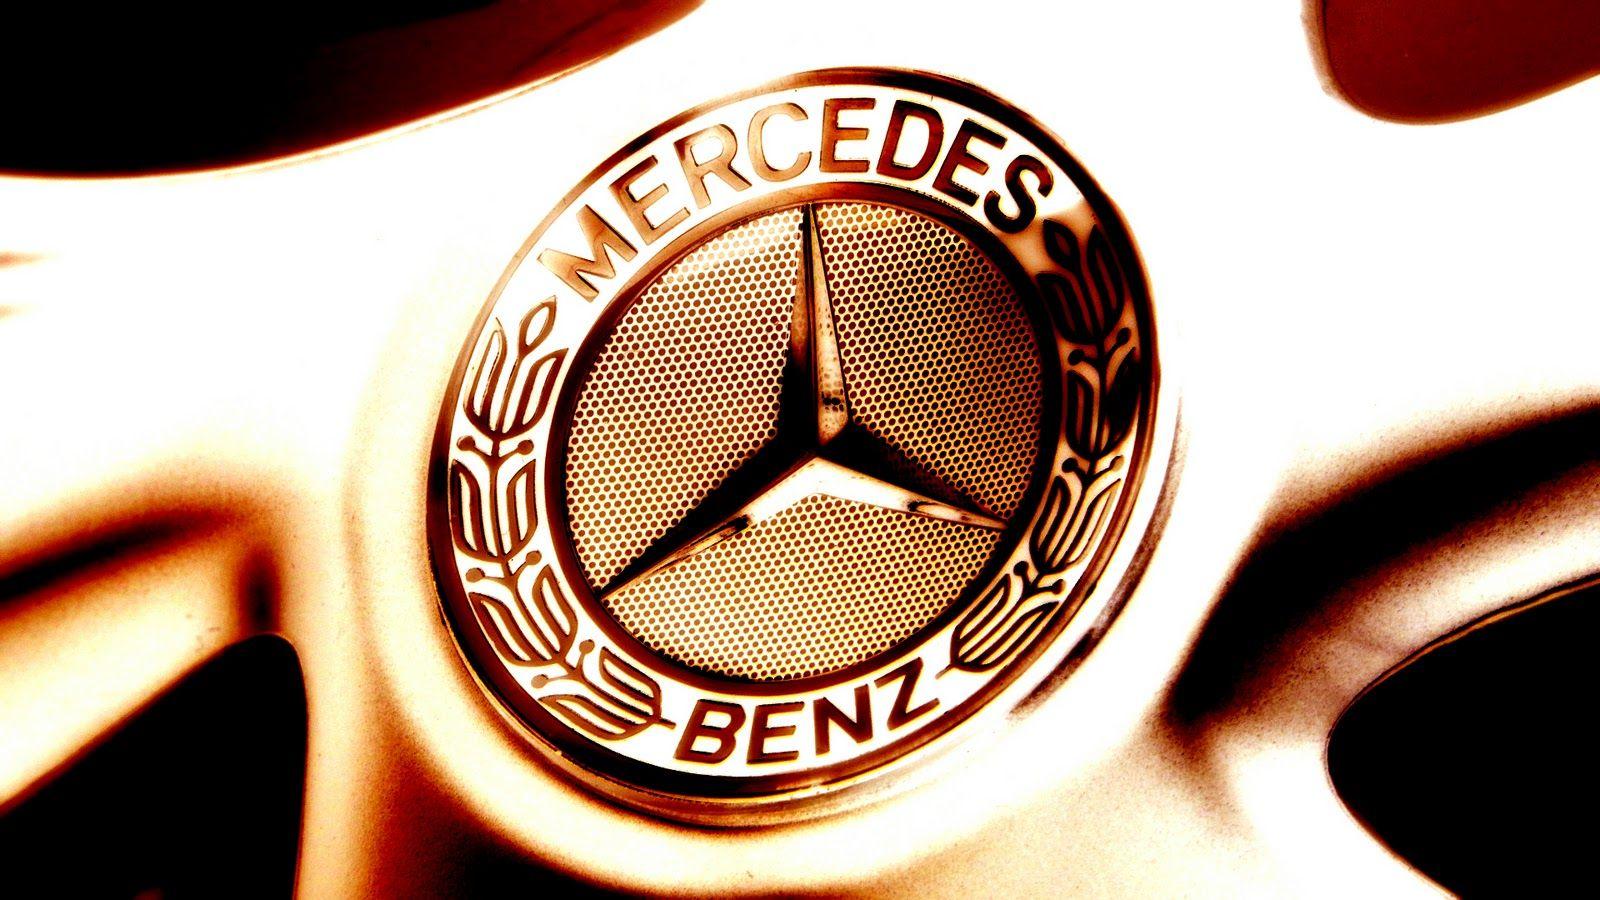 Orange Circle Car Logo - Mercedes Logo, Mercedes-Benz Car Symbol Meaning and History | Car ...